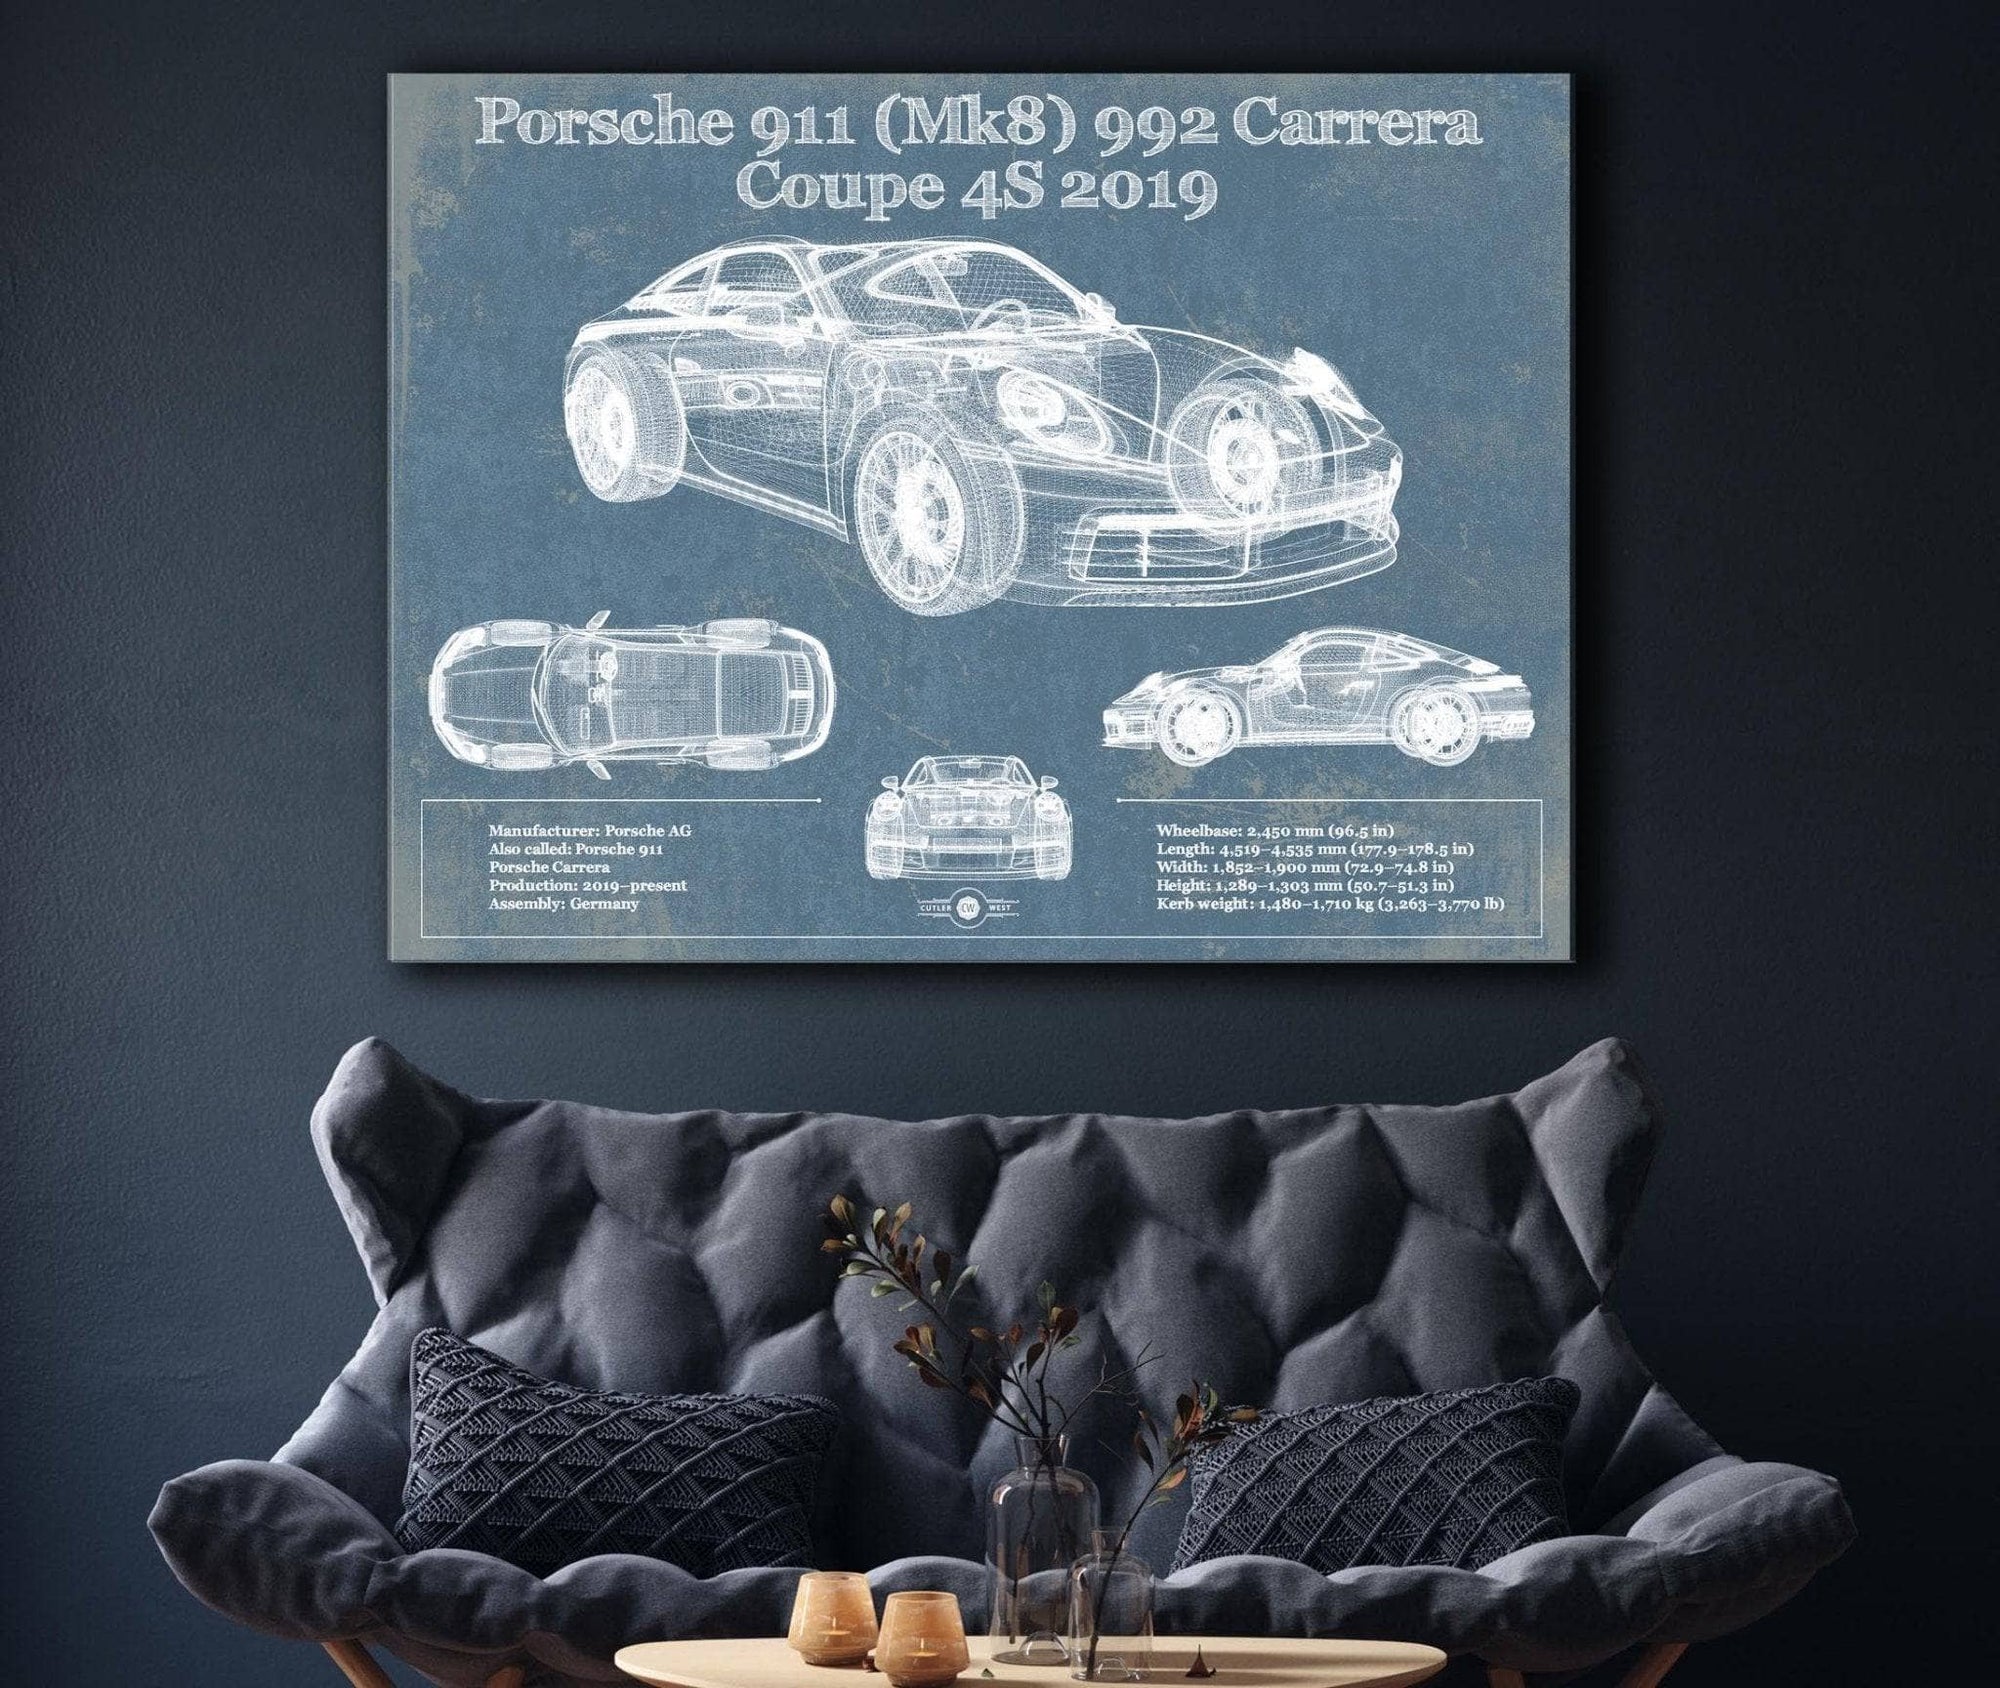 Cutler West Porsche Collection Porsche 911 Mk8 992 Carrera Coupe 4s 2019 Vintage Blueprint Auto Print